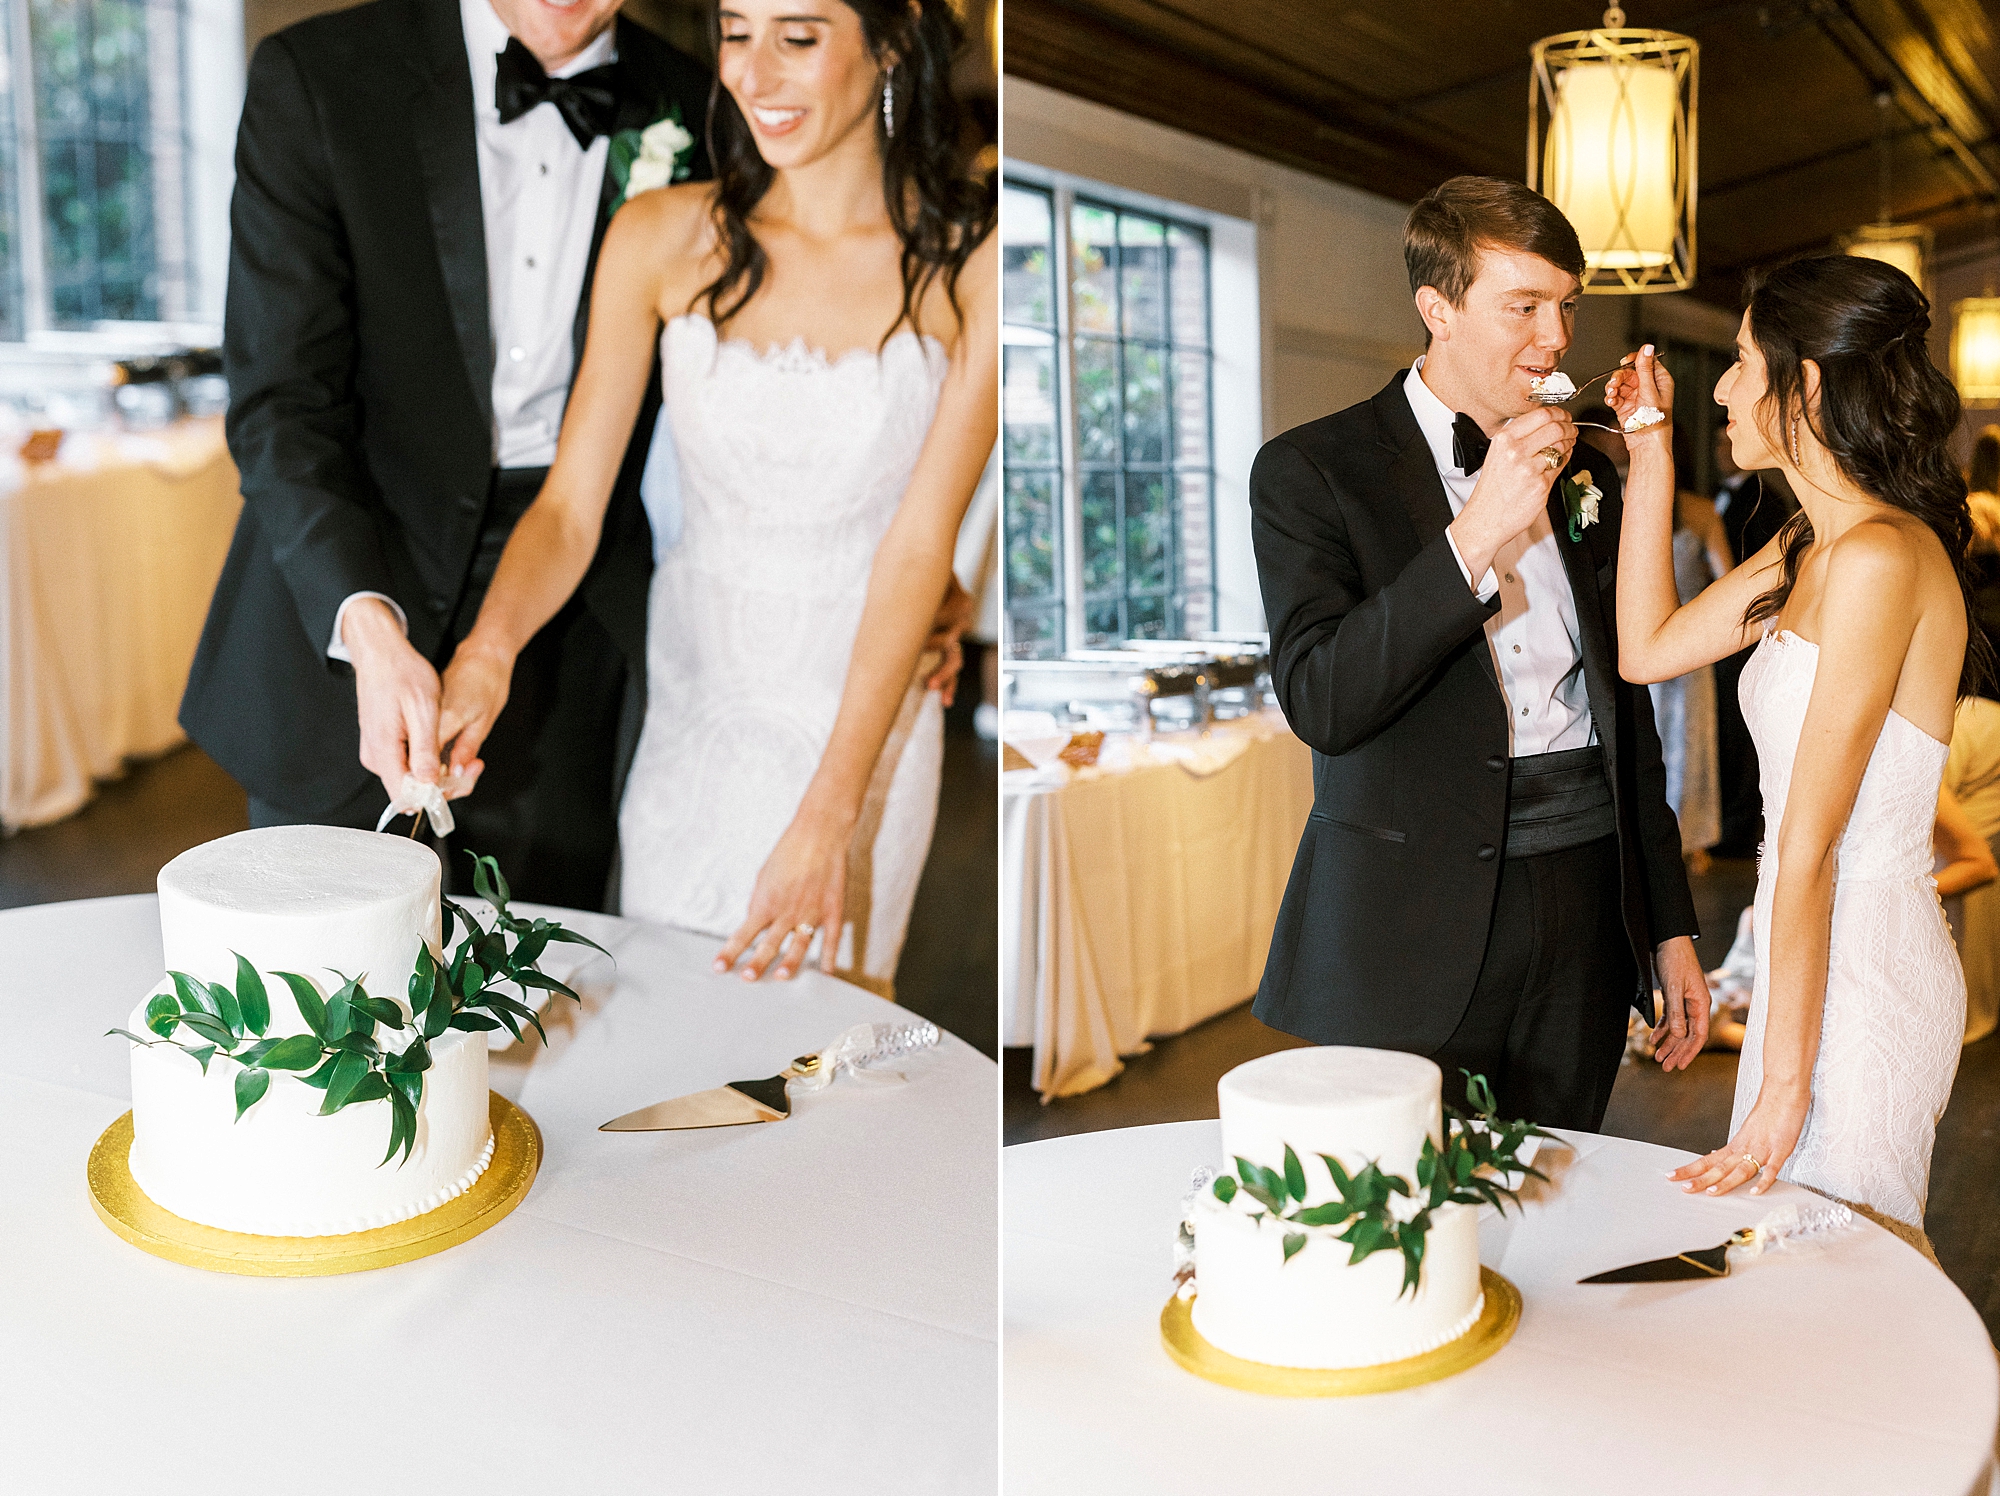 newlyweds cut wedding cake during NC reception 